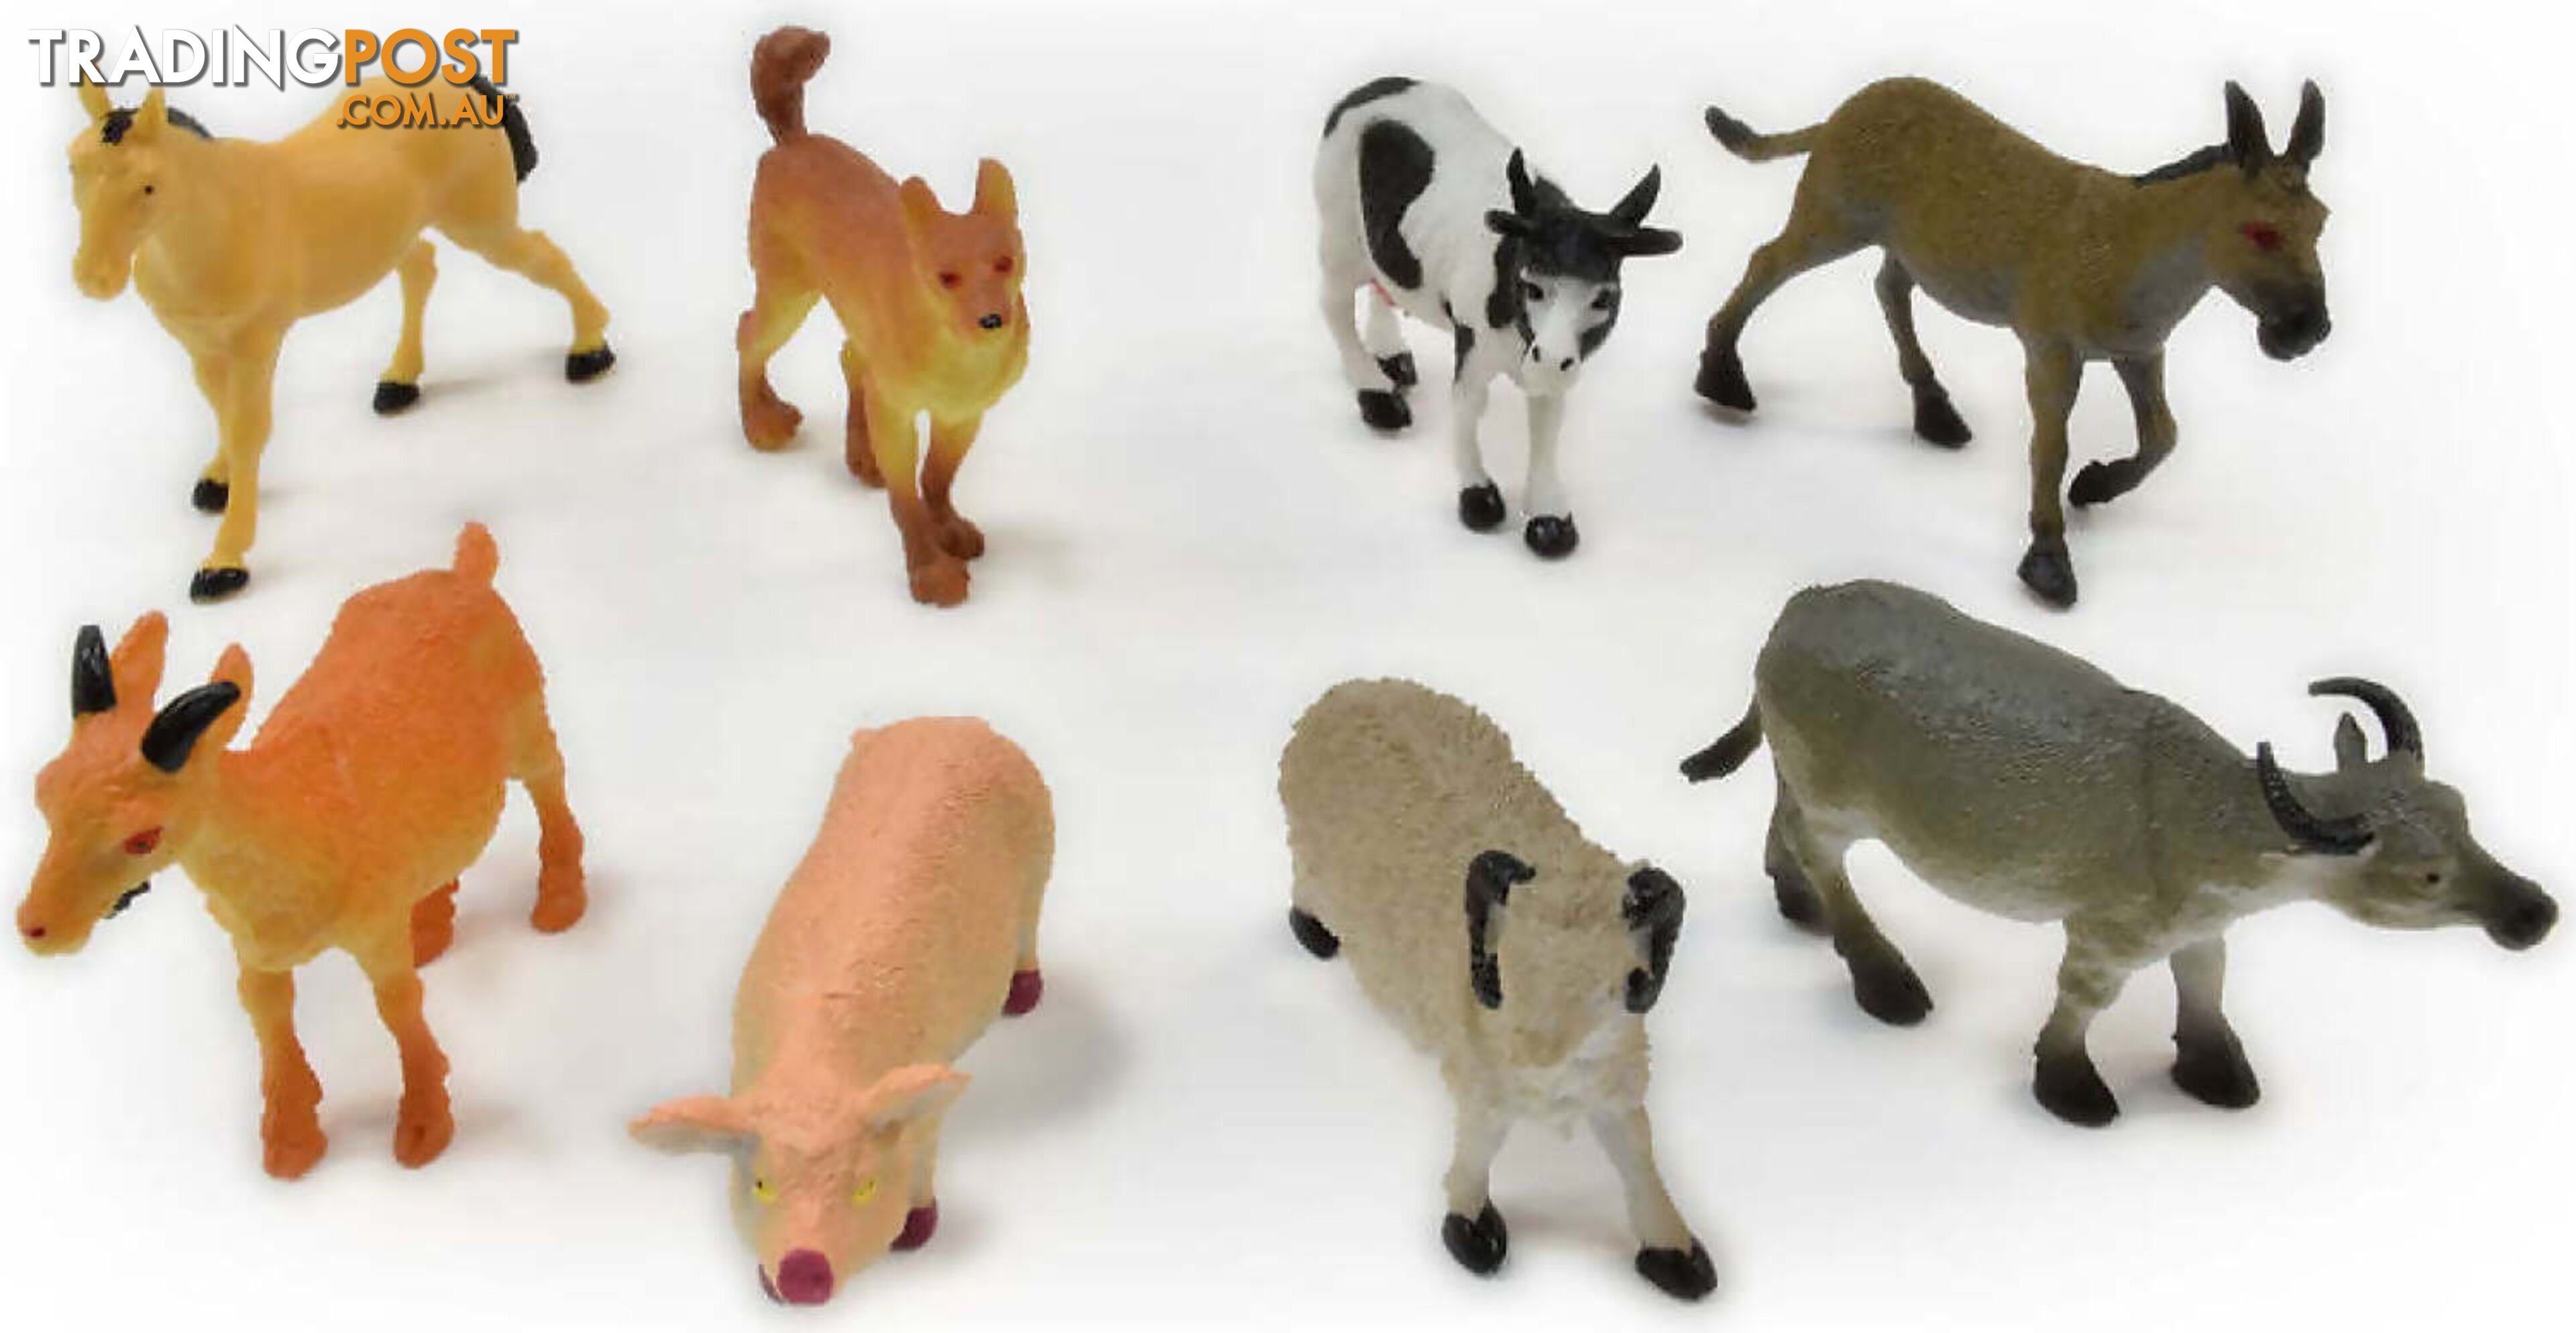 Peterkin Classics - Farm World 8 Piece Figure Set - Art63089 - 5018621210390